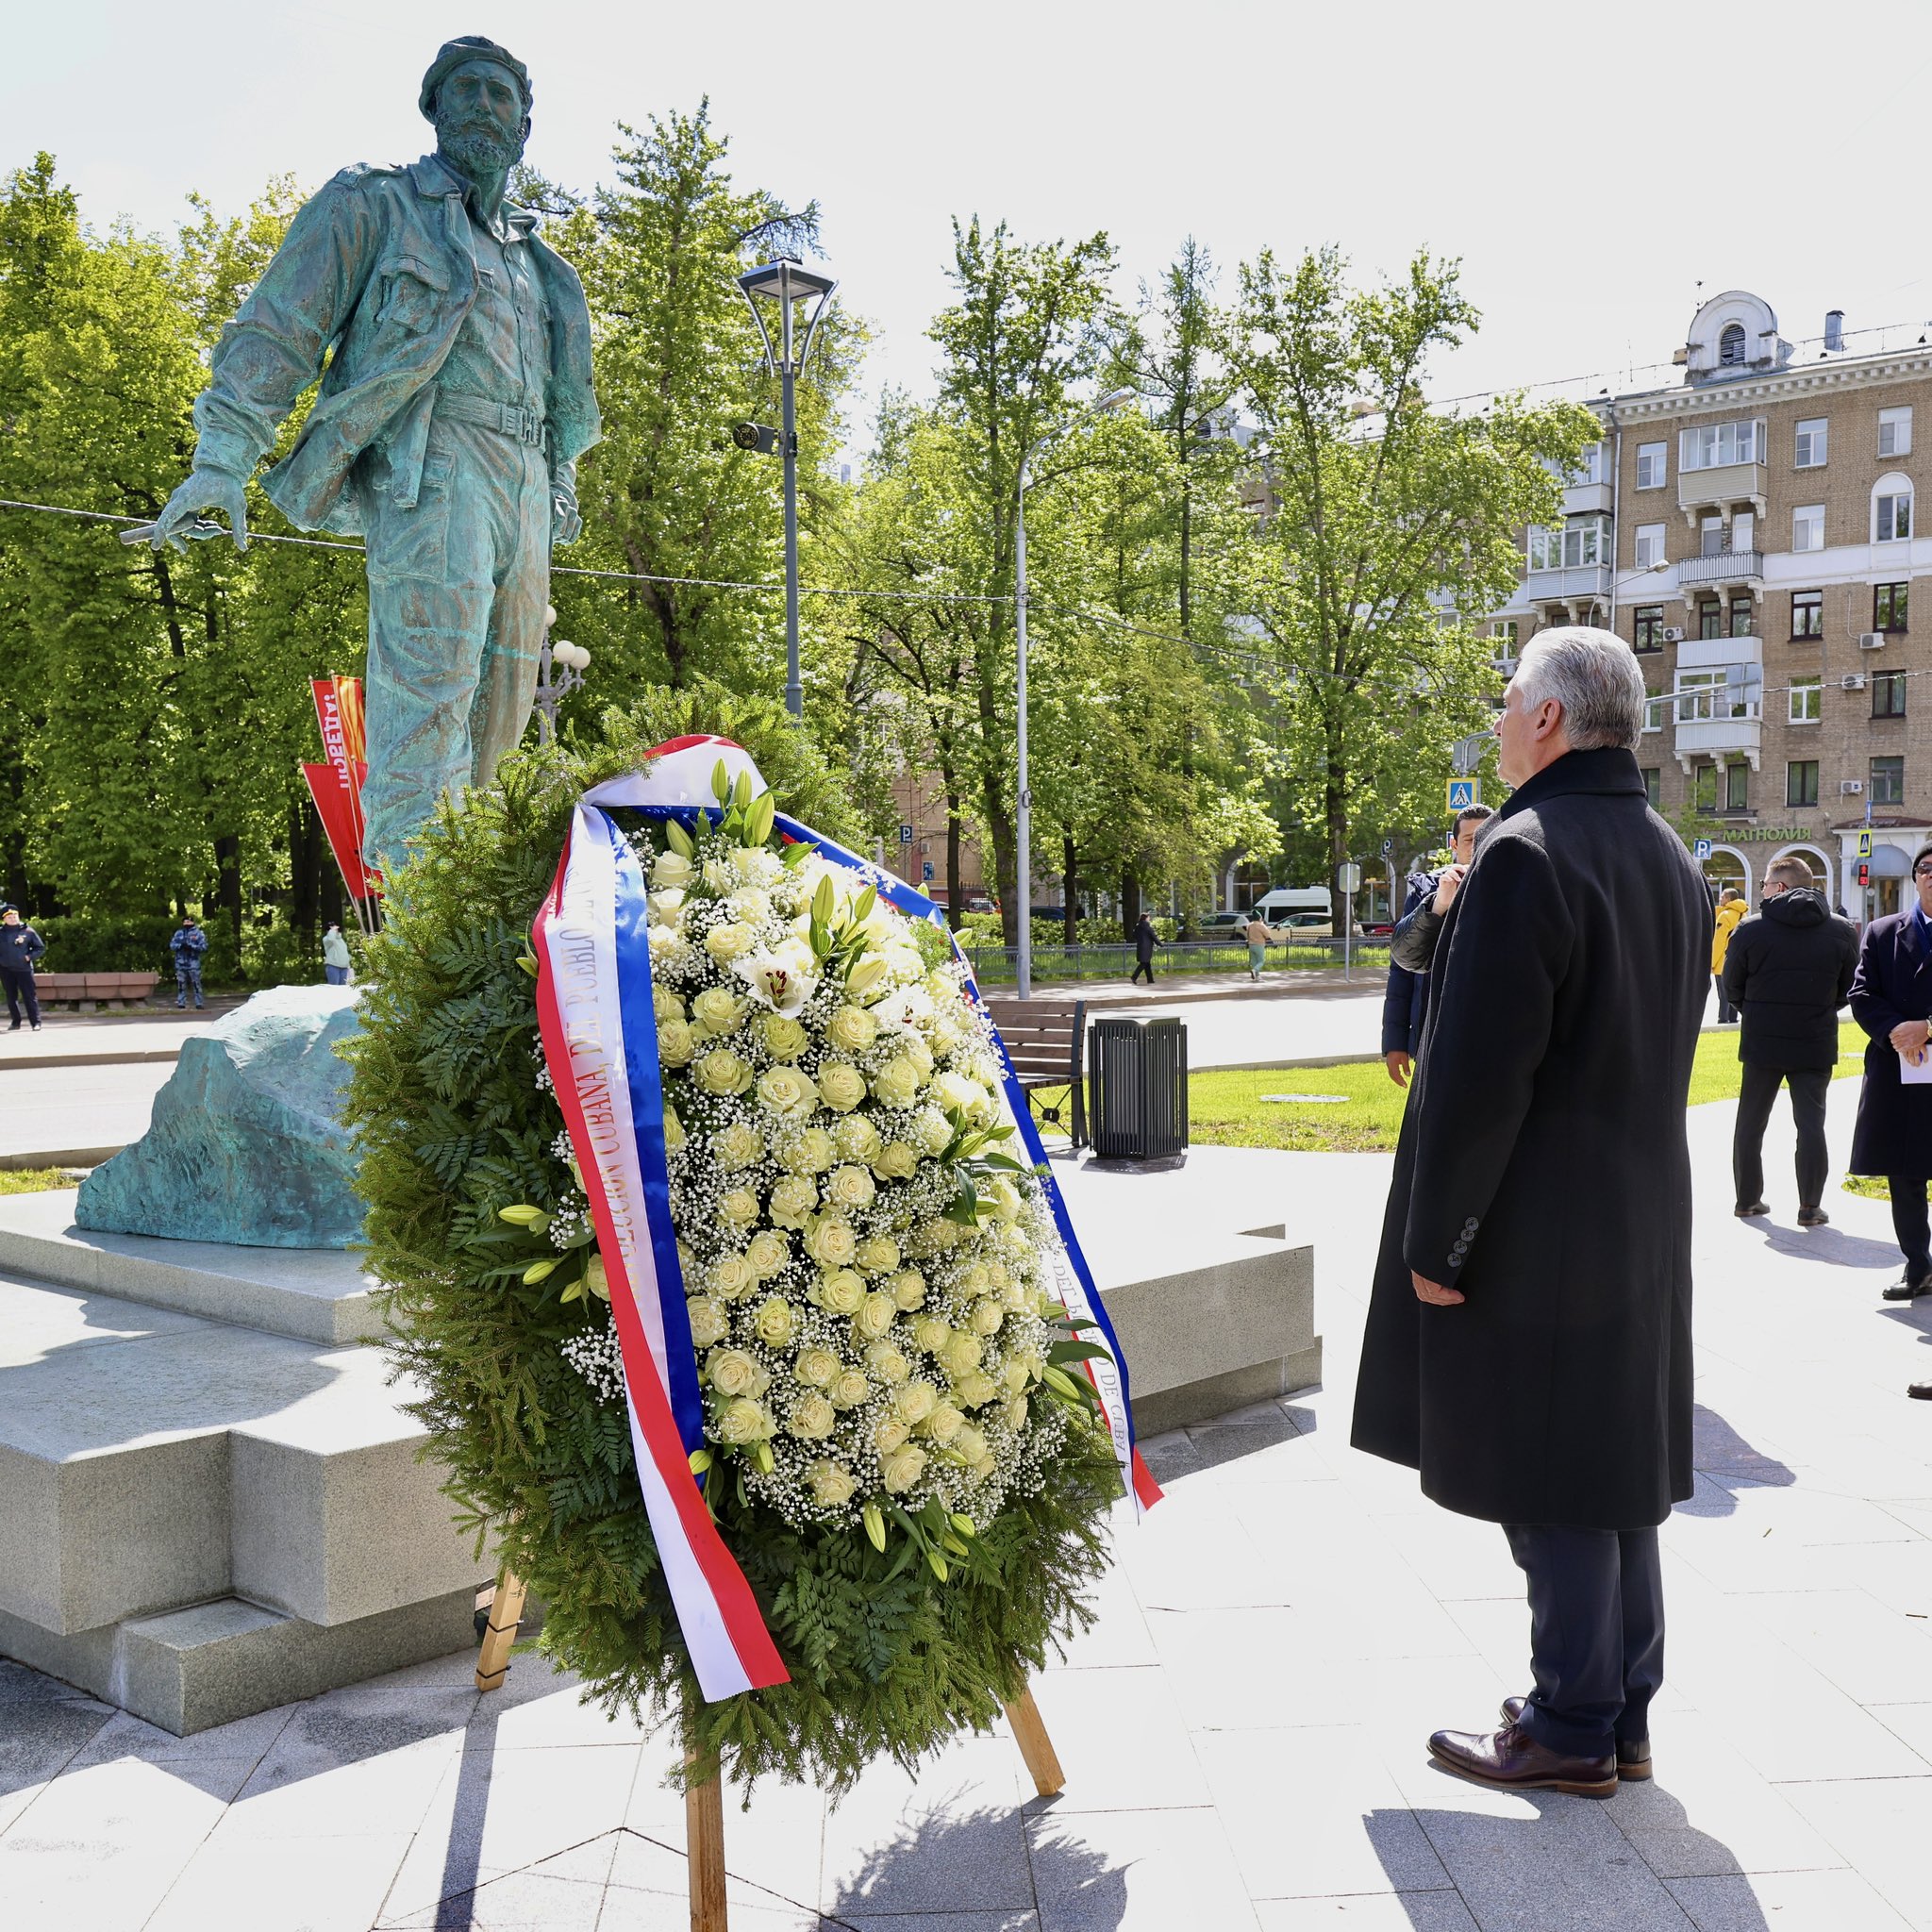 Díaz-Canel rinde honores a Fidel Castro en Moscú 